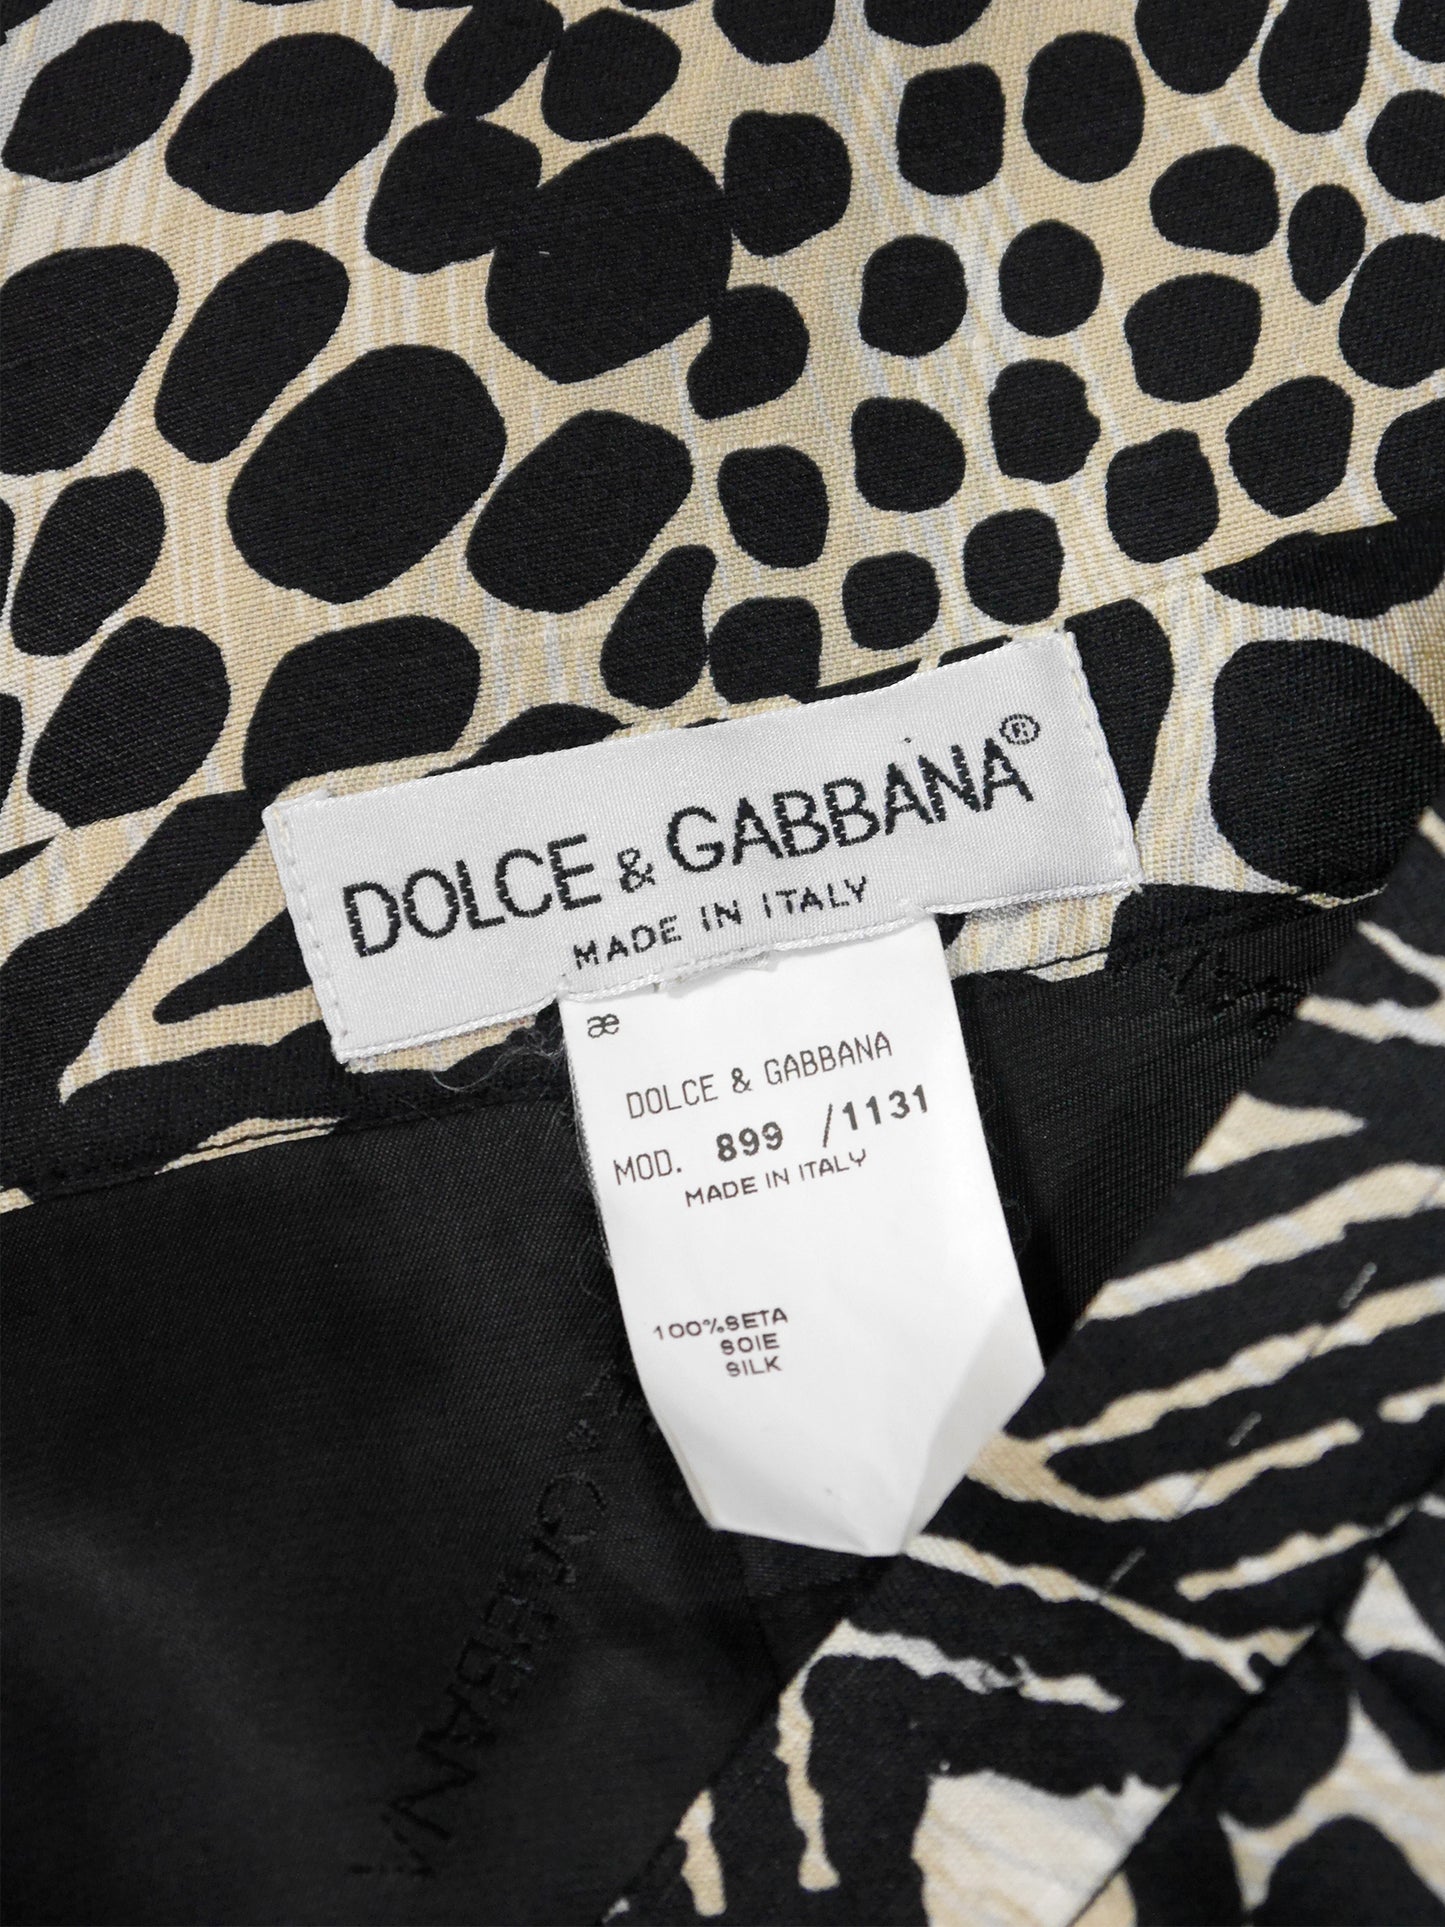 DOLCE & GABBANA Spring 1996 Vintage Animal Print Silk Mini Skirt Size S-M